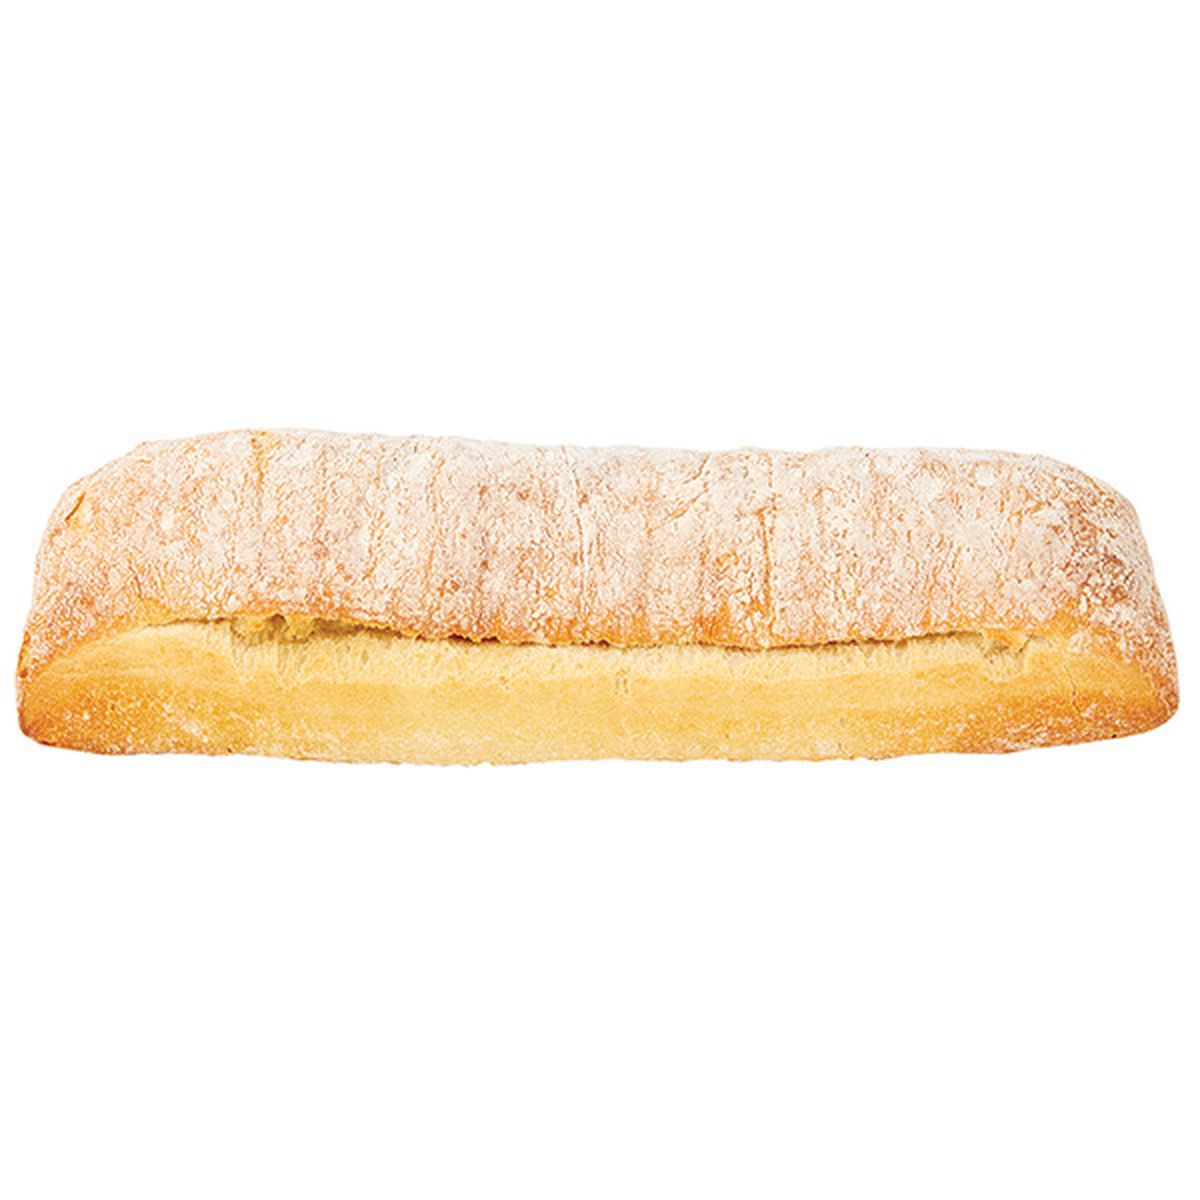 Calories in Wegmans Bread, Ciabatta